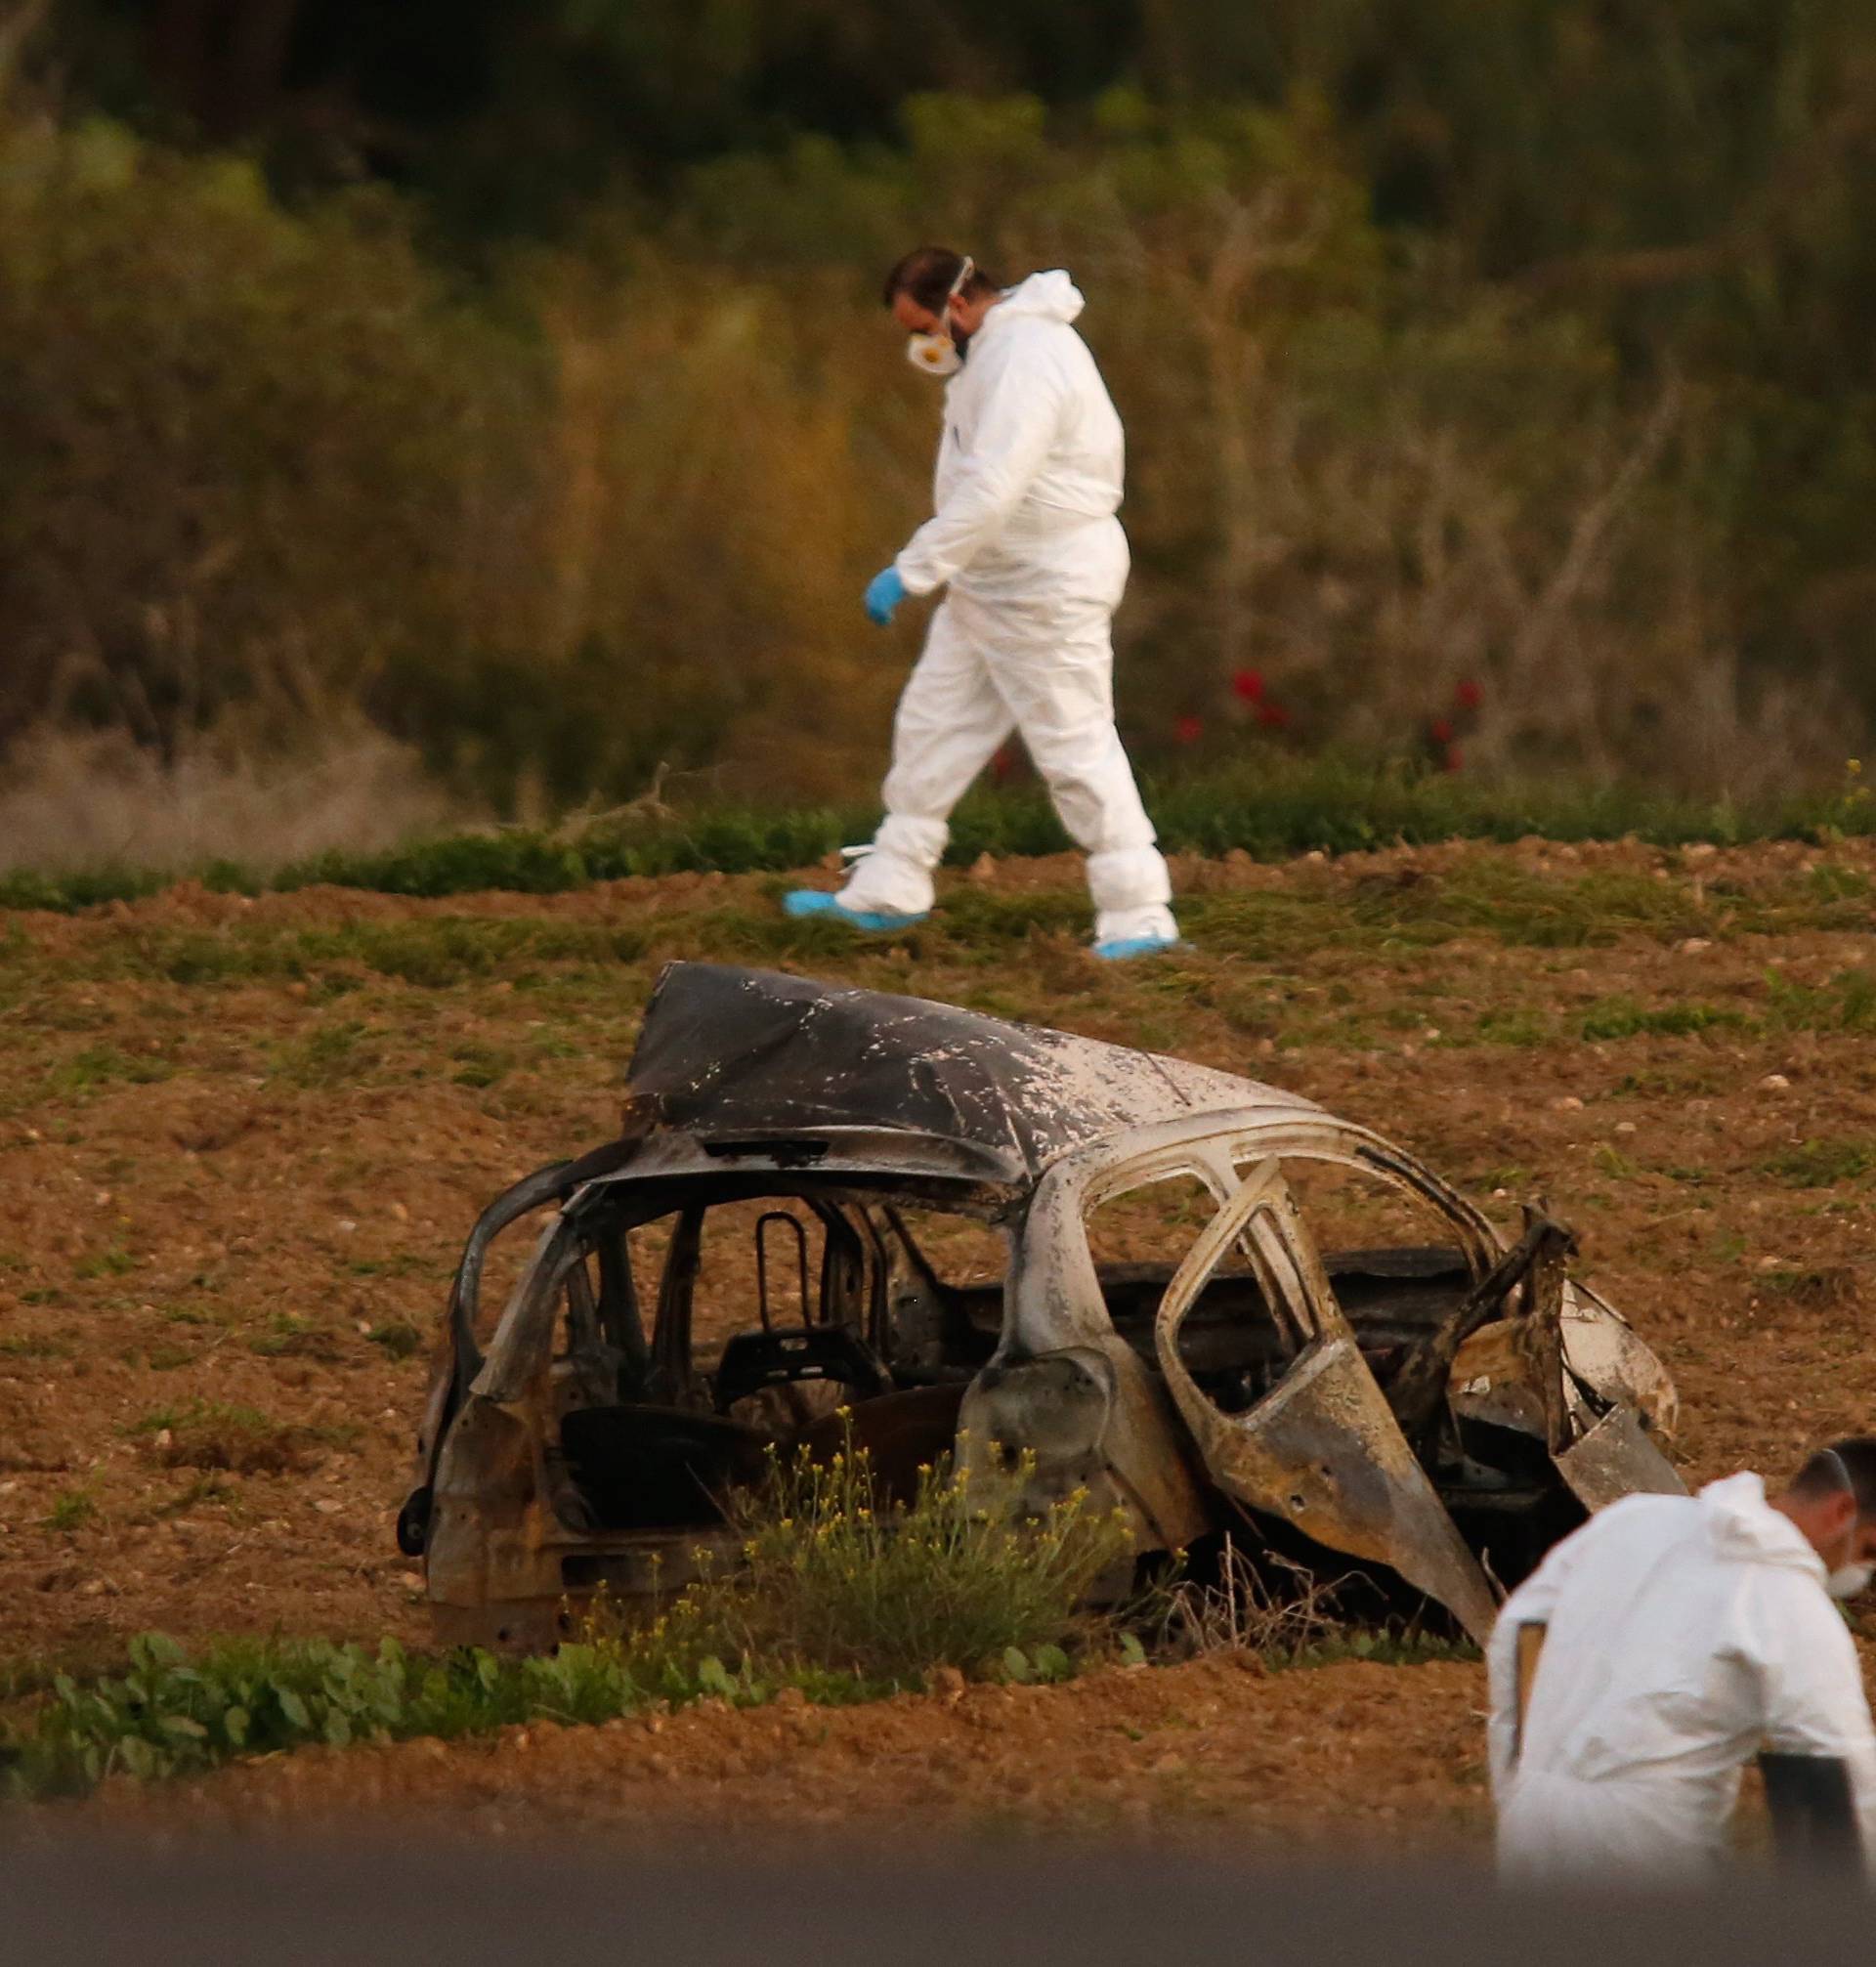 Forensic experts walk in a field after a powerful bomb blew up a car killing investigative journalist Daphne Caruana Galizia in Bidnija